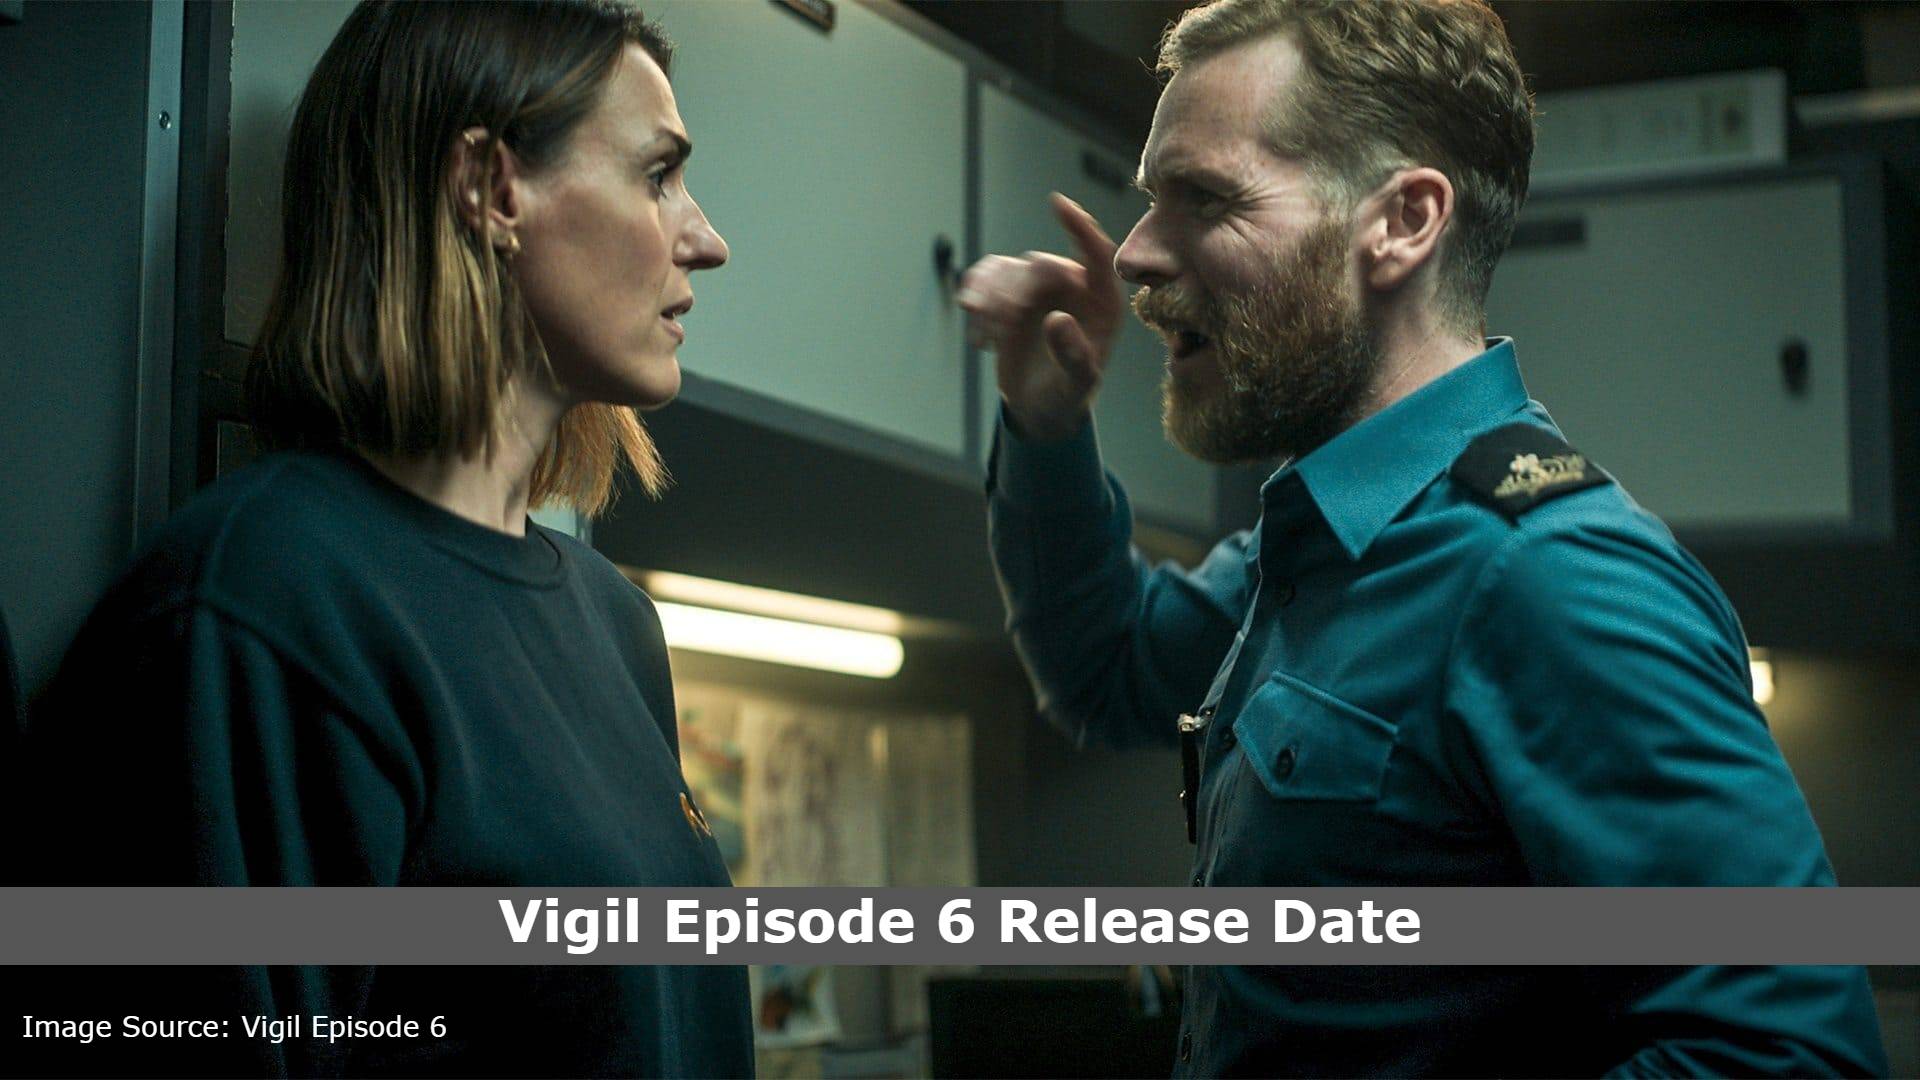 Vigil Episode 6 Release Date, Time, Cast, Trailer, Episode List, Where Can I Watch Vigil Episode 6